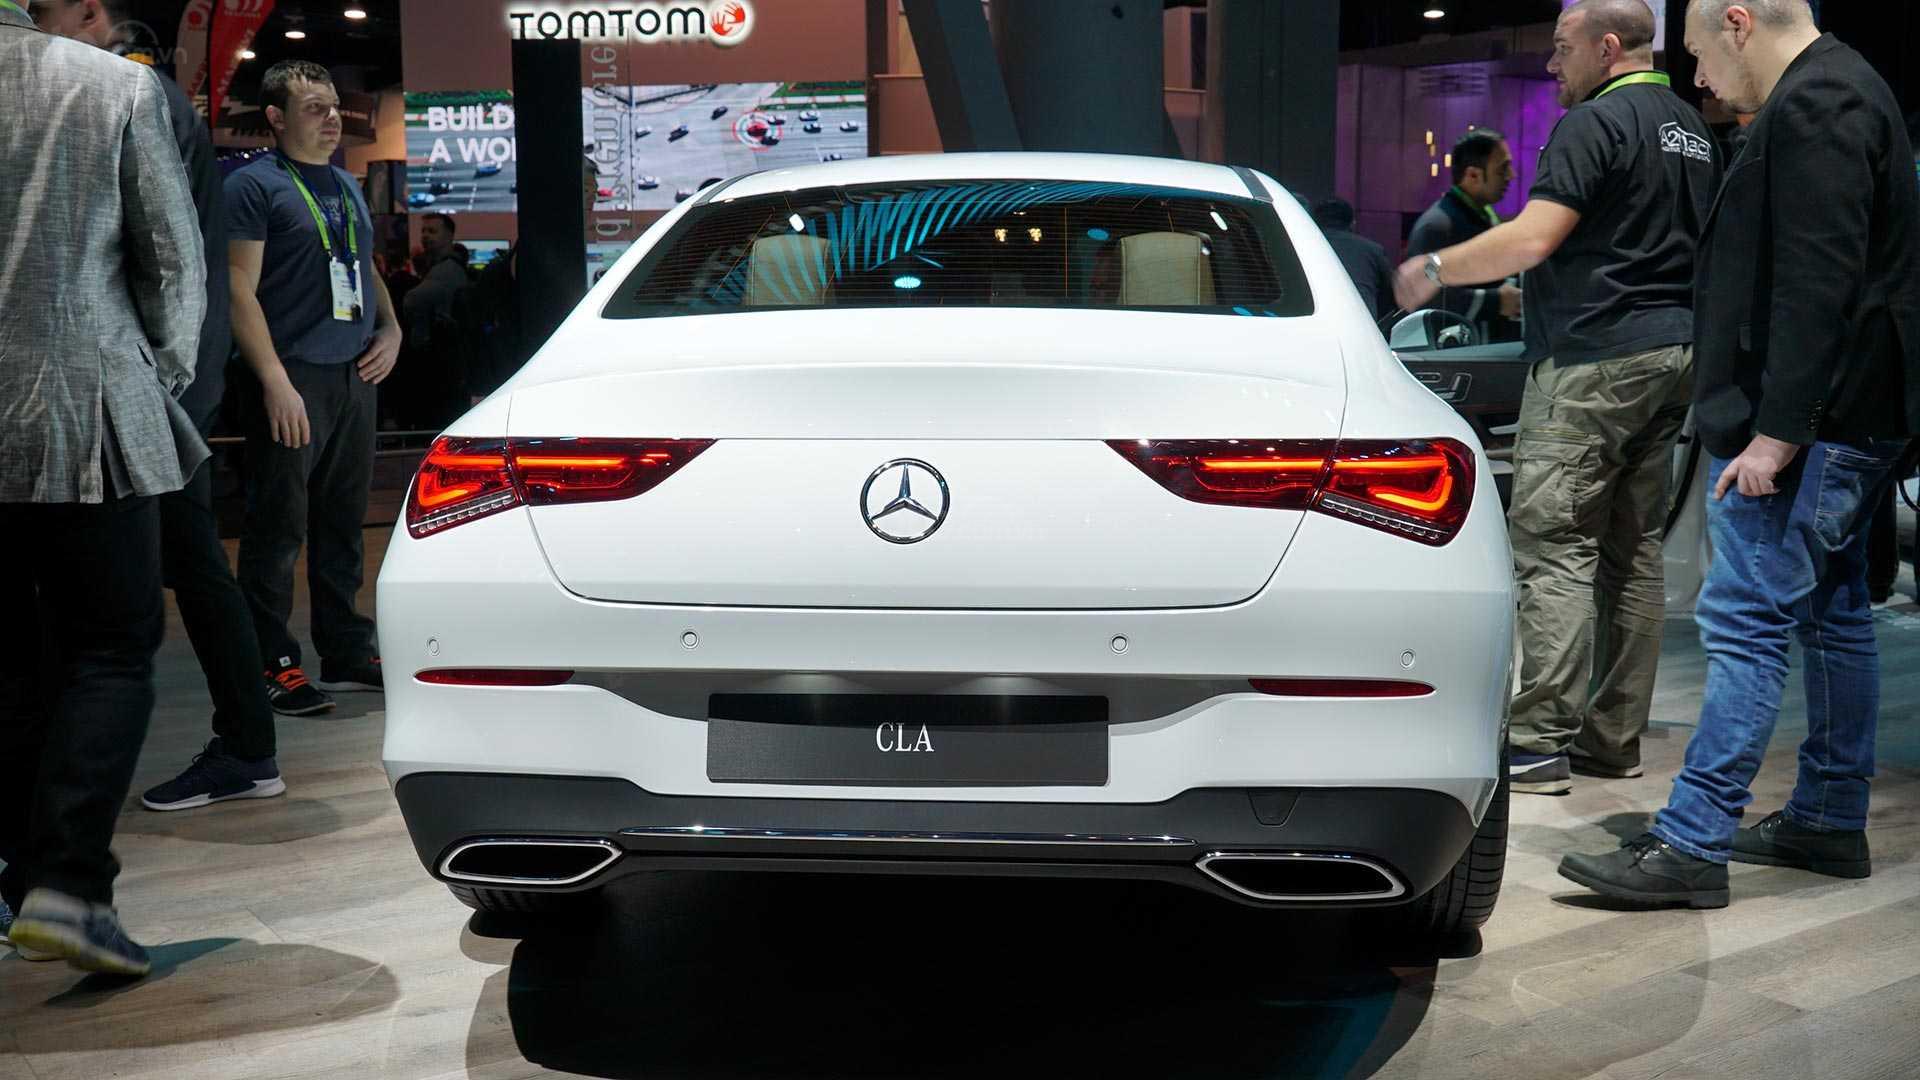 Đánh giá xe Mercedes-Benz CLA-Class 2020